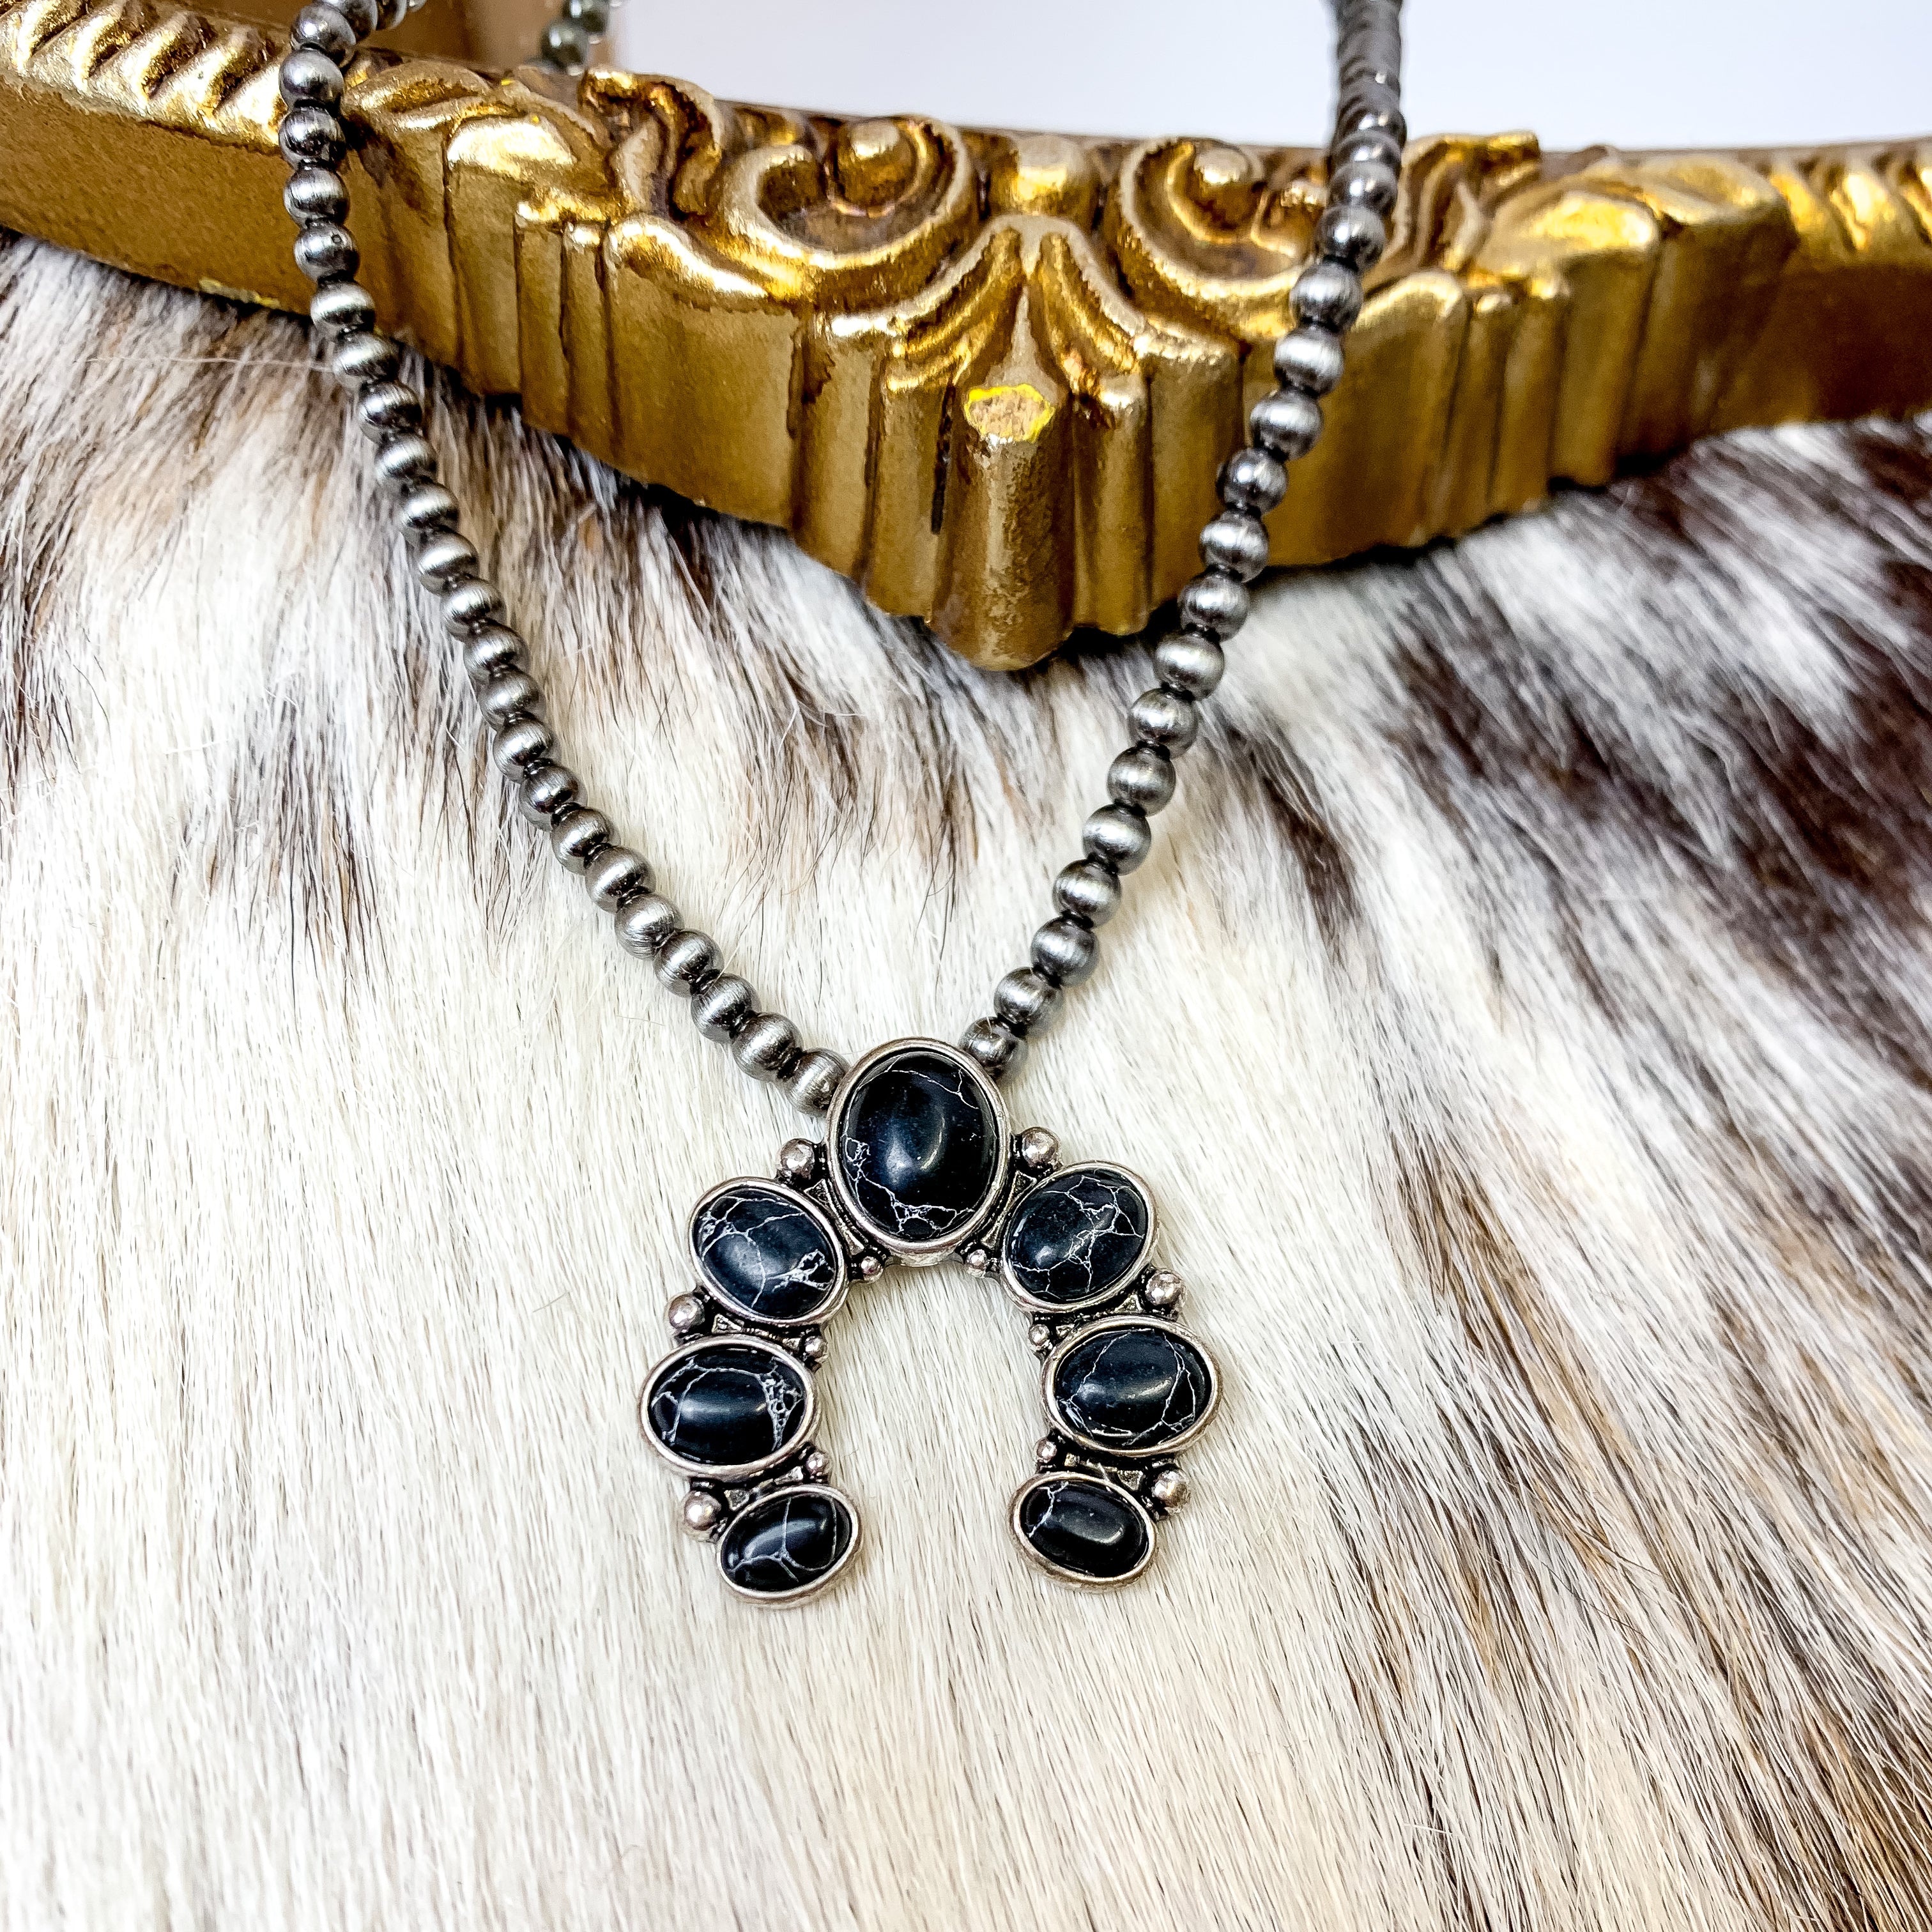 Small Silver Tone Faux Navajo Pearl Choker Necklace with Black Stone Naja Pendant